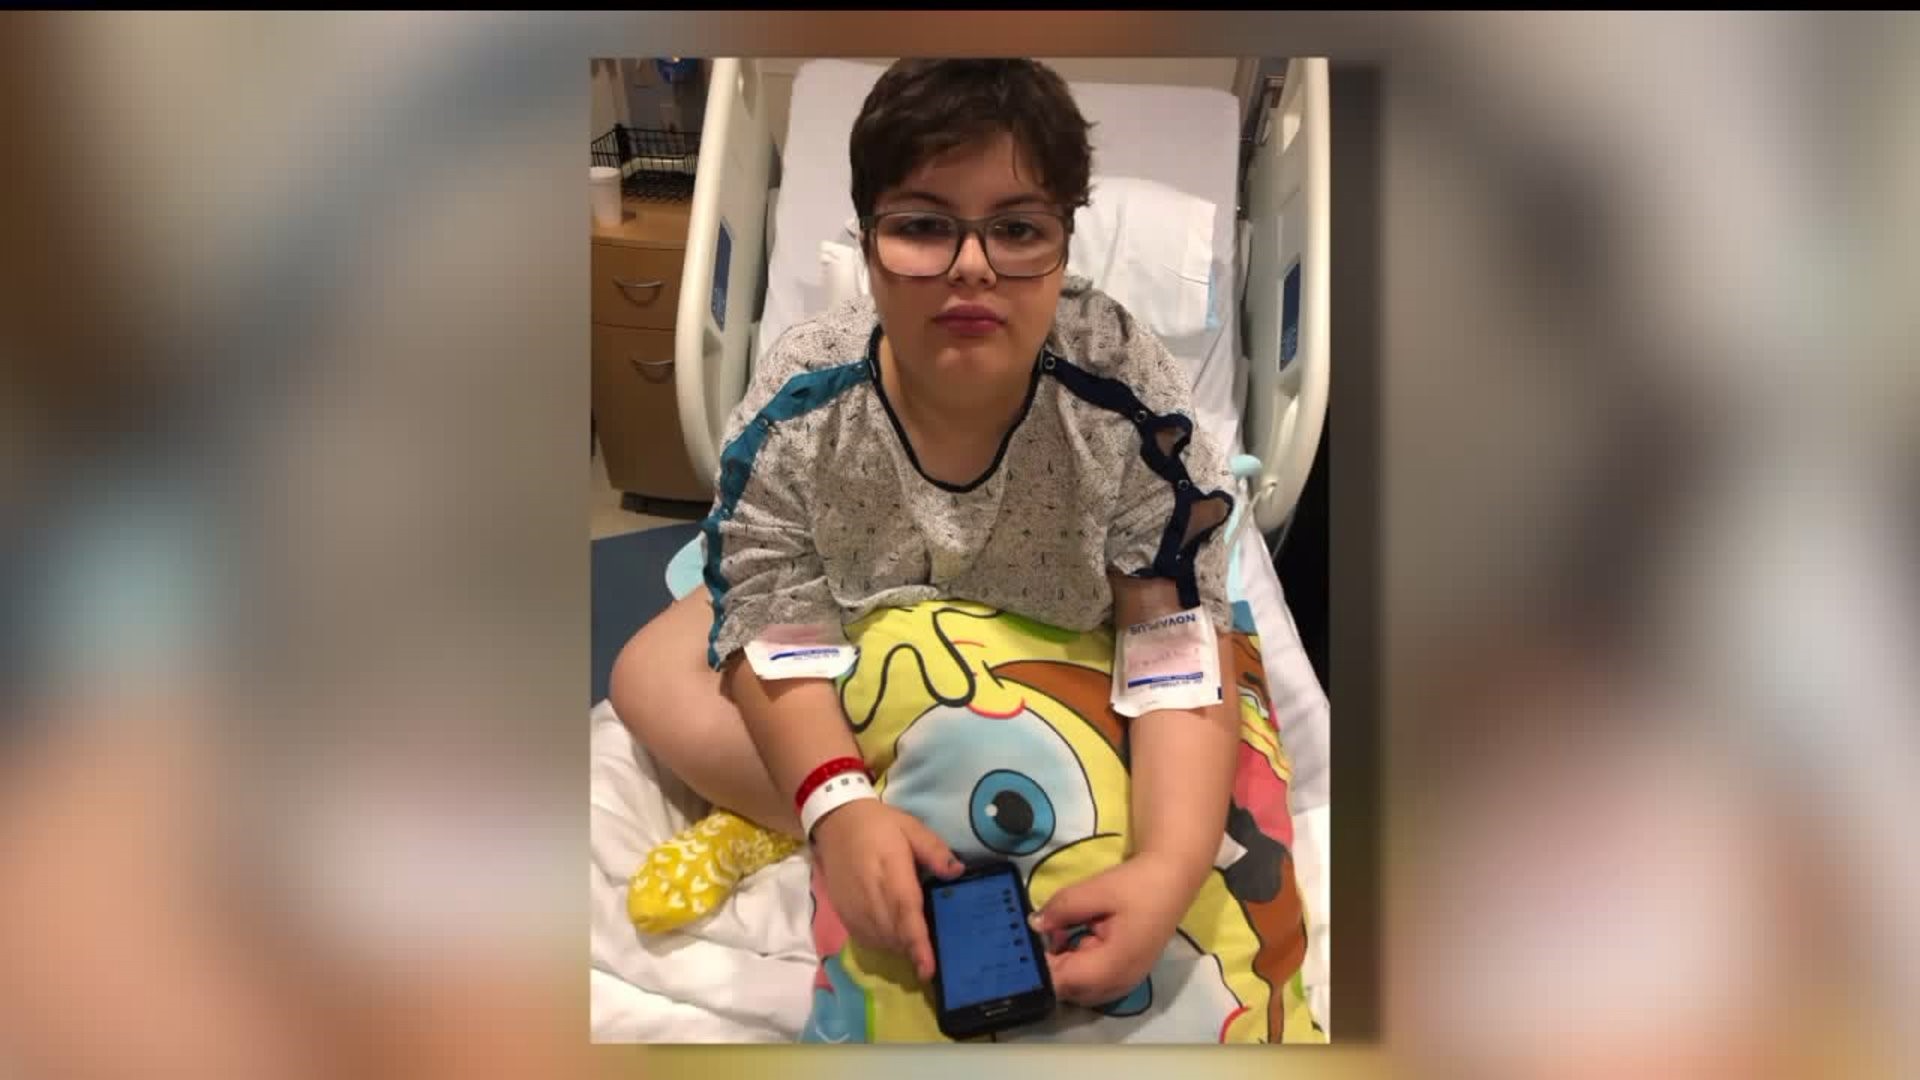 York County teen battling stage 4 kidney failure; needs kidney donor